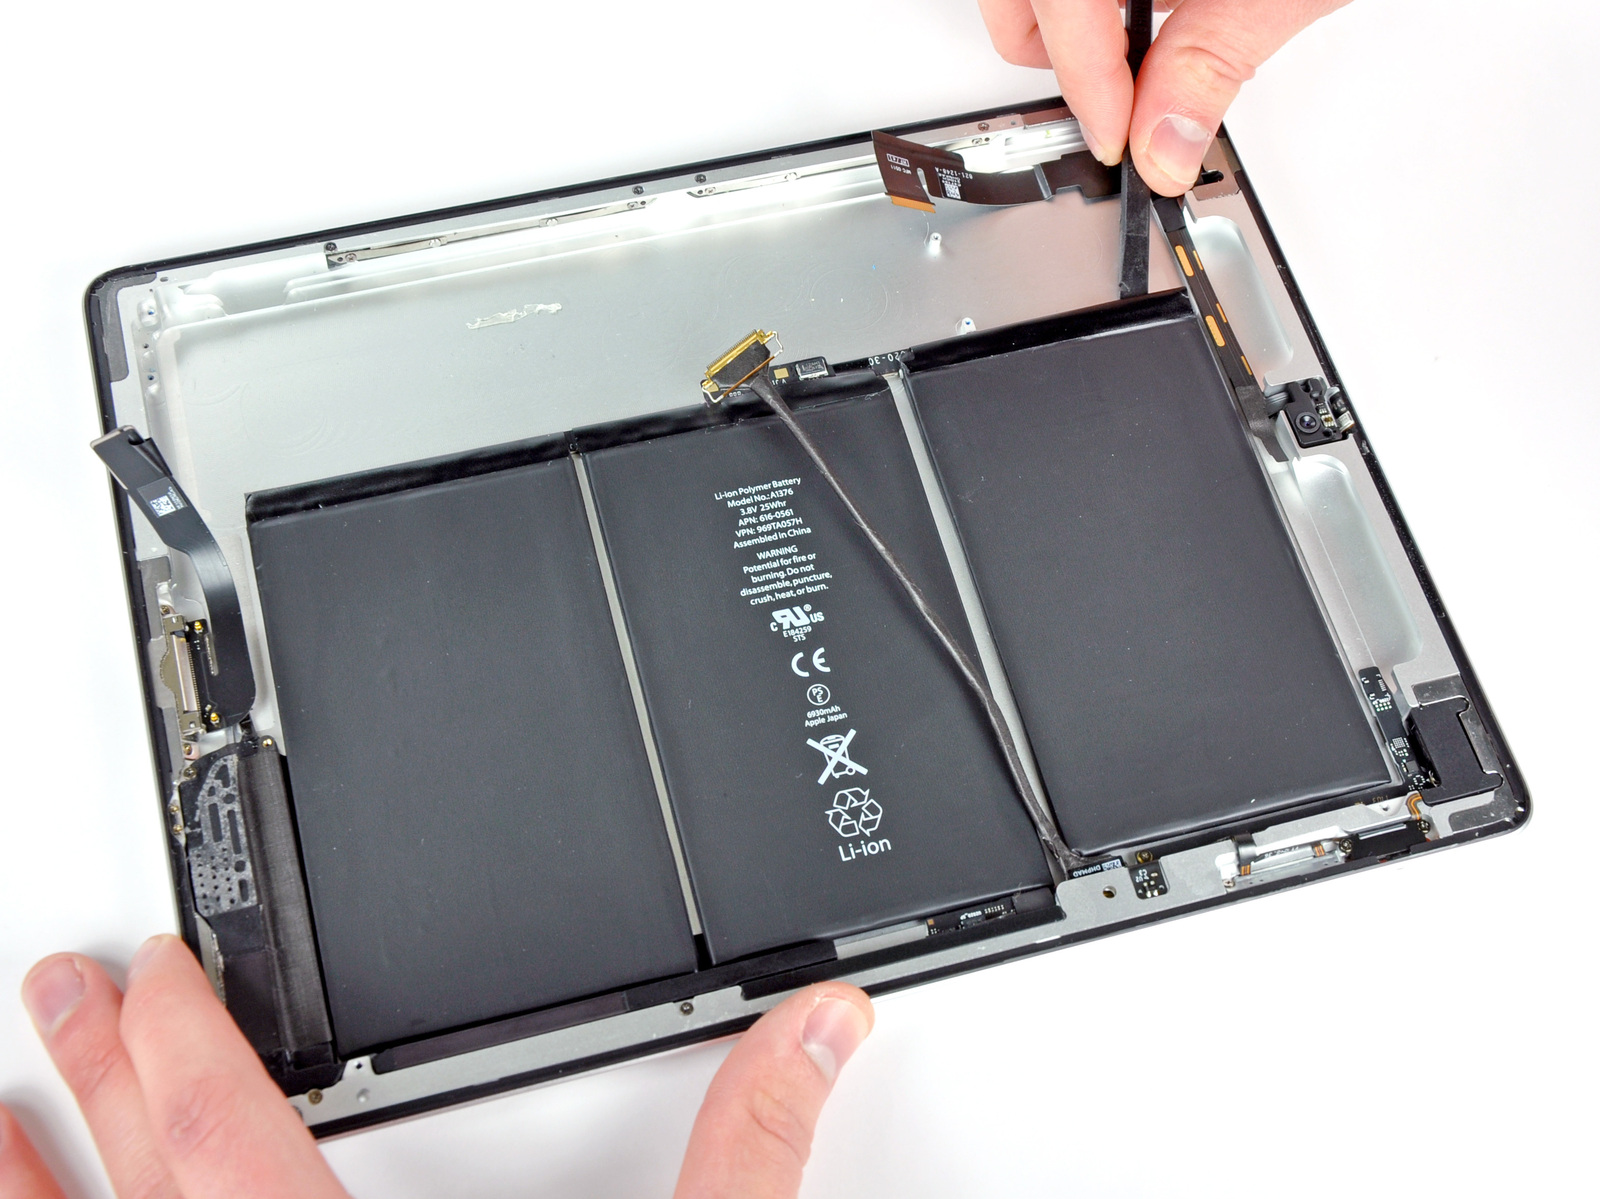 iPad 2 desmontado pela iFixit - bateria